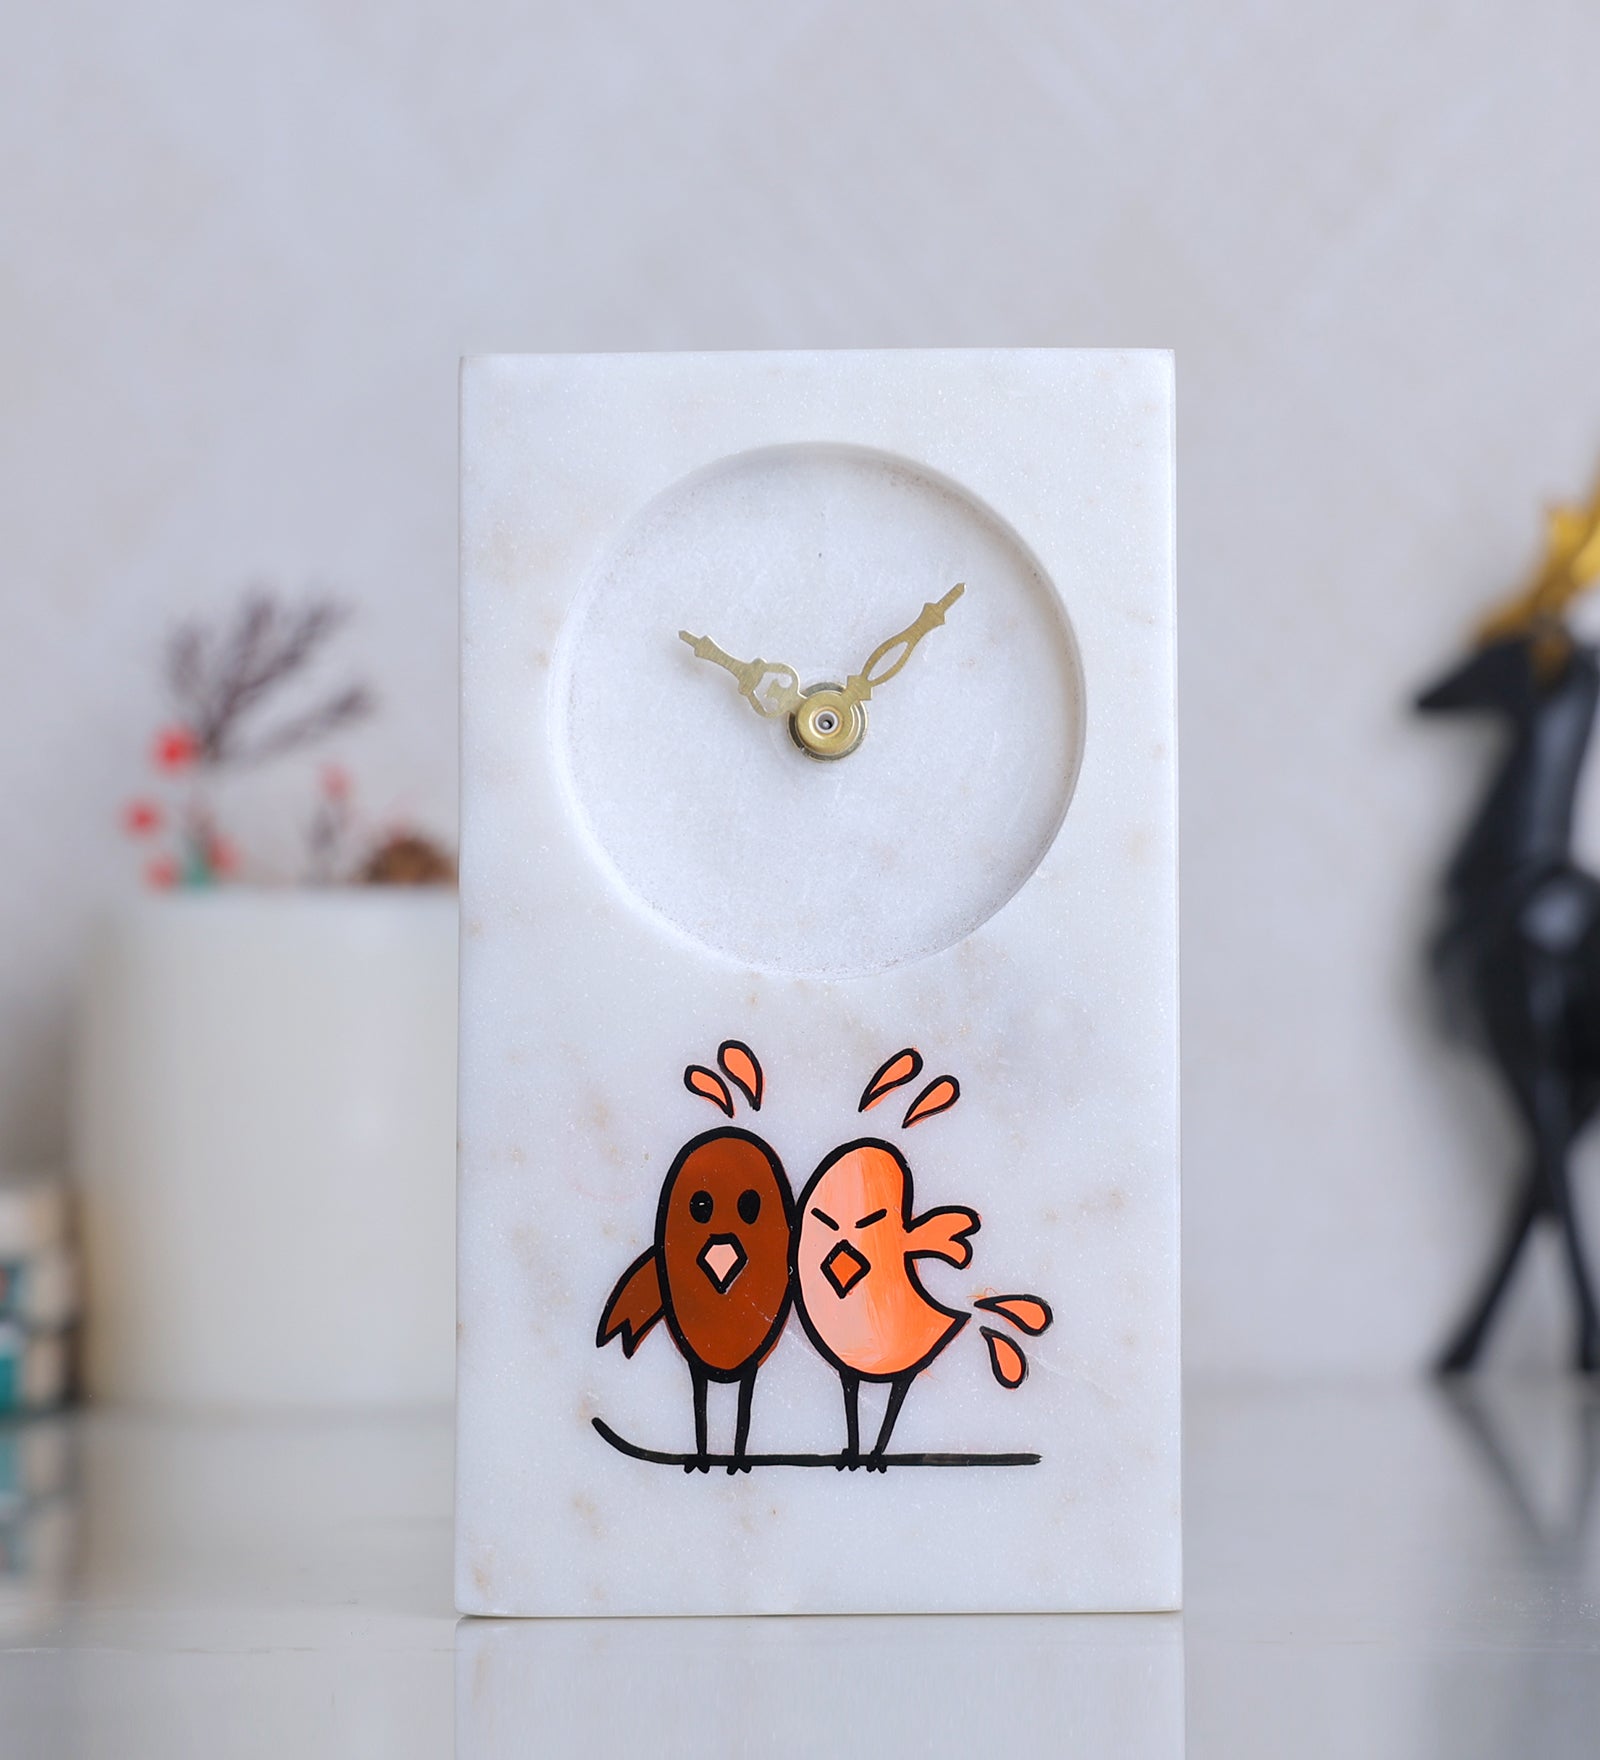 Kiddy Birds Decorative Table Clock